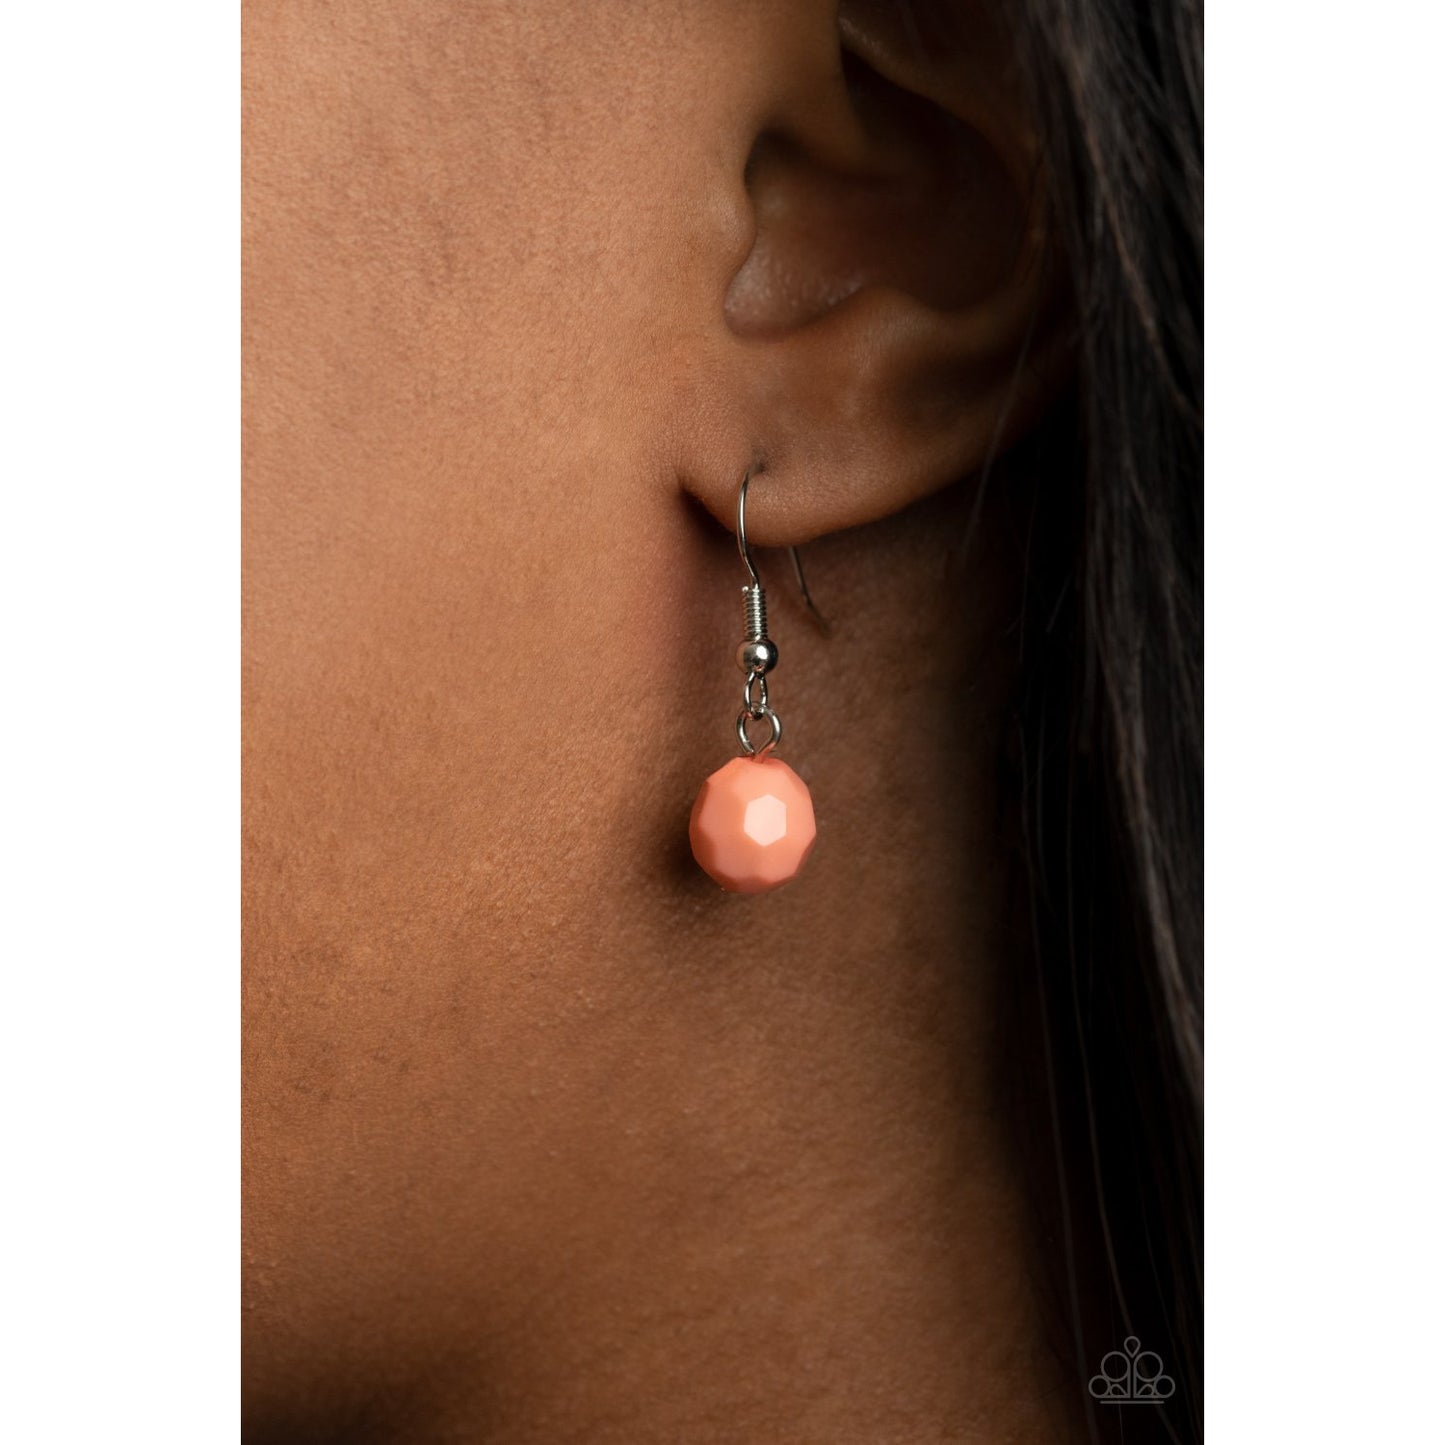 Extra Eloquent - Coral Orange Necklace - Paparazzi Accessories - GlaMarous Titi Jewels